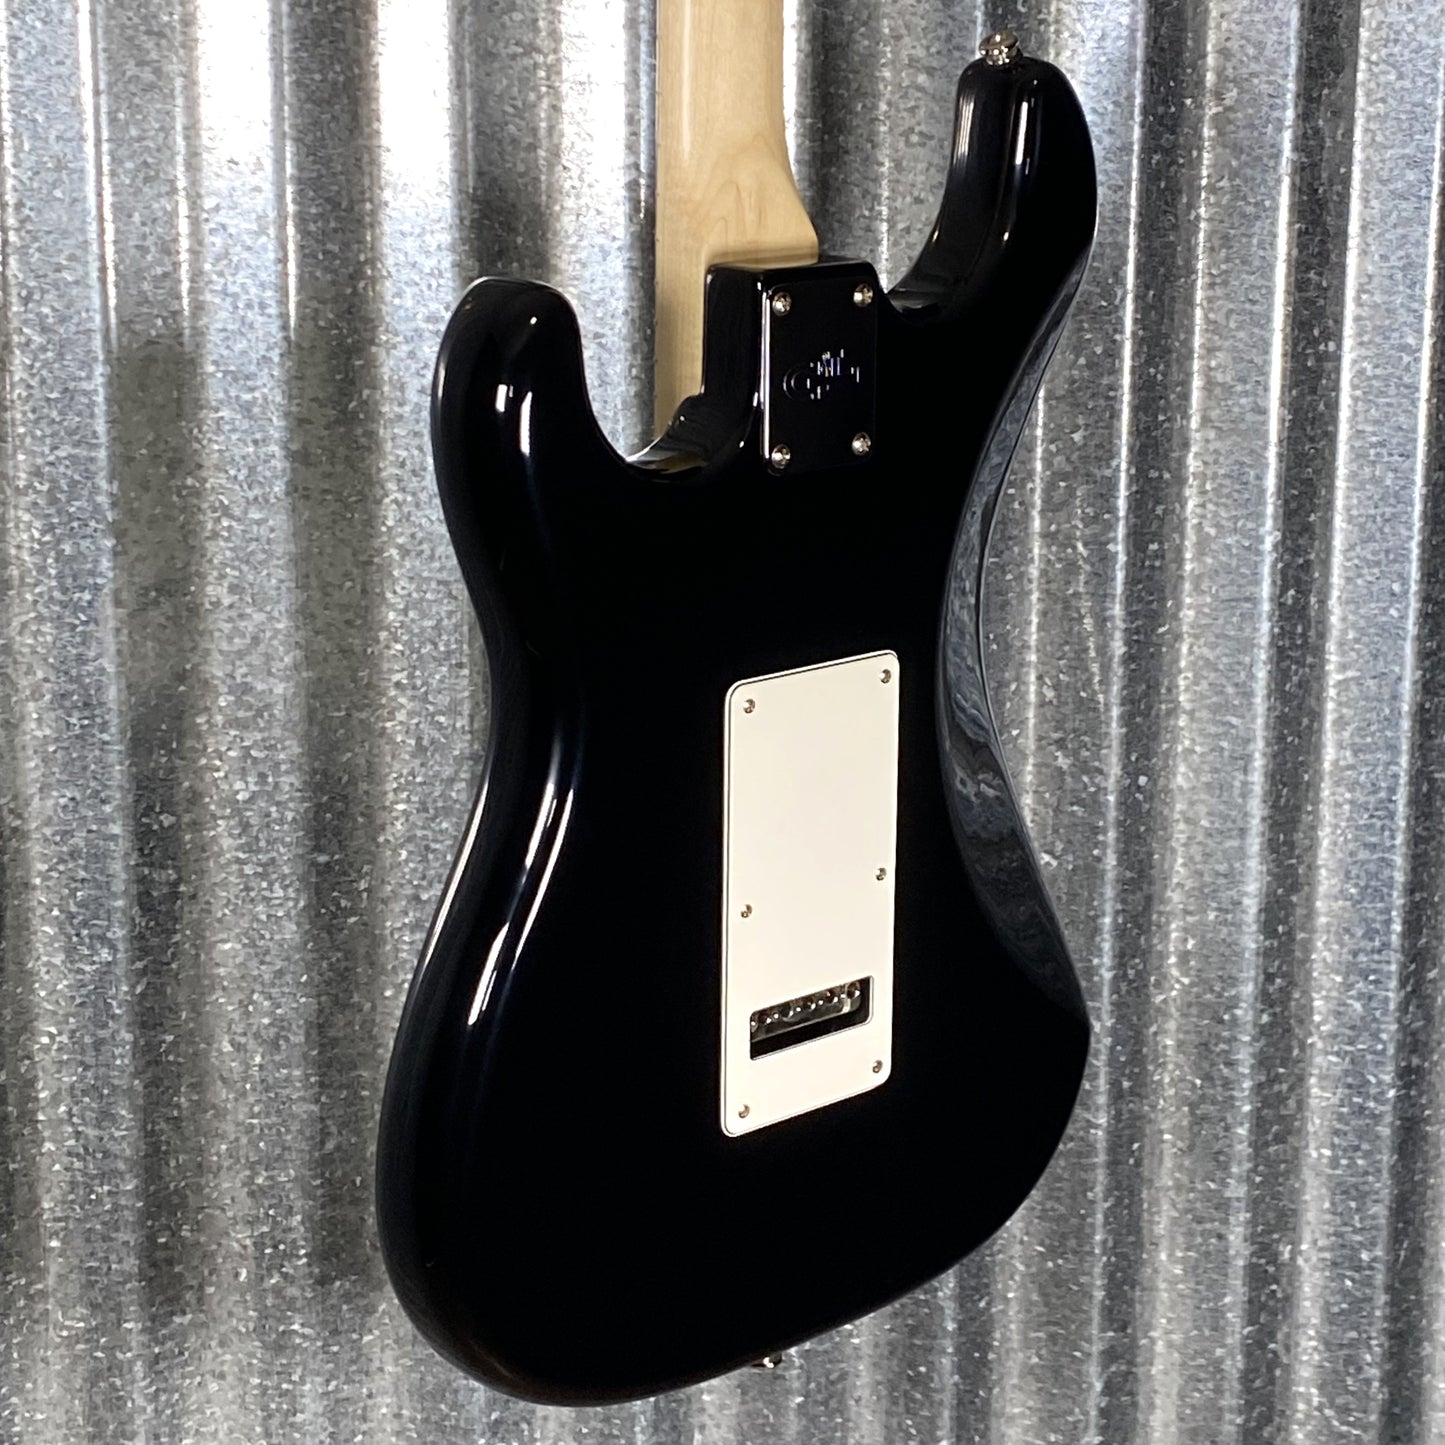 G&L USA Fullerton Deluxe Legacy Jet Black Guitar & Bag Blem #0328